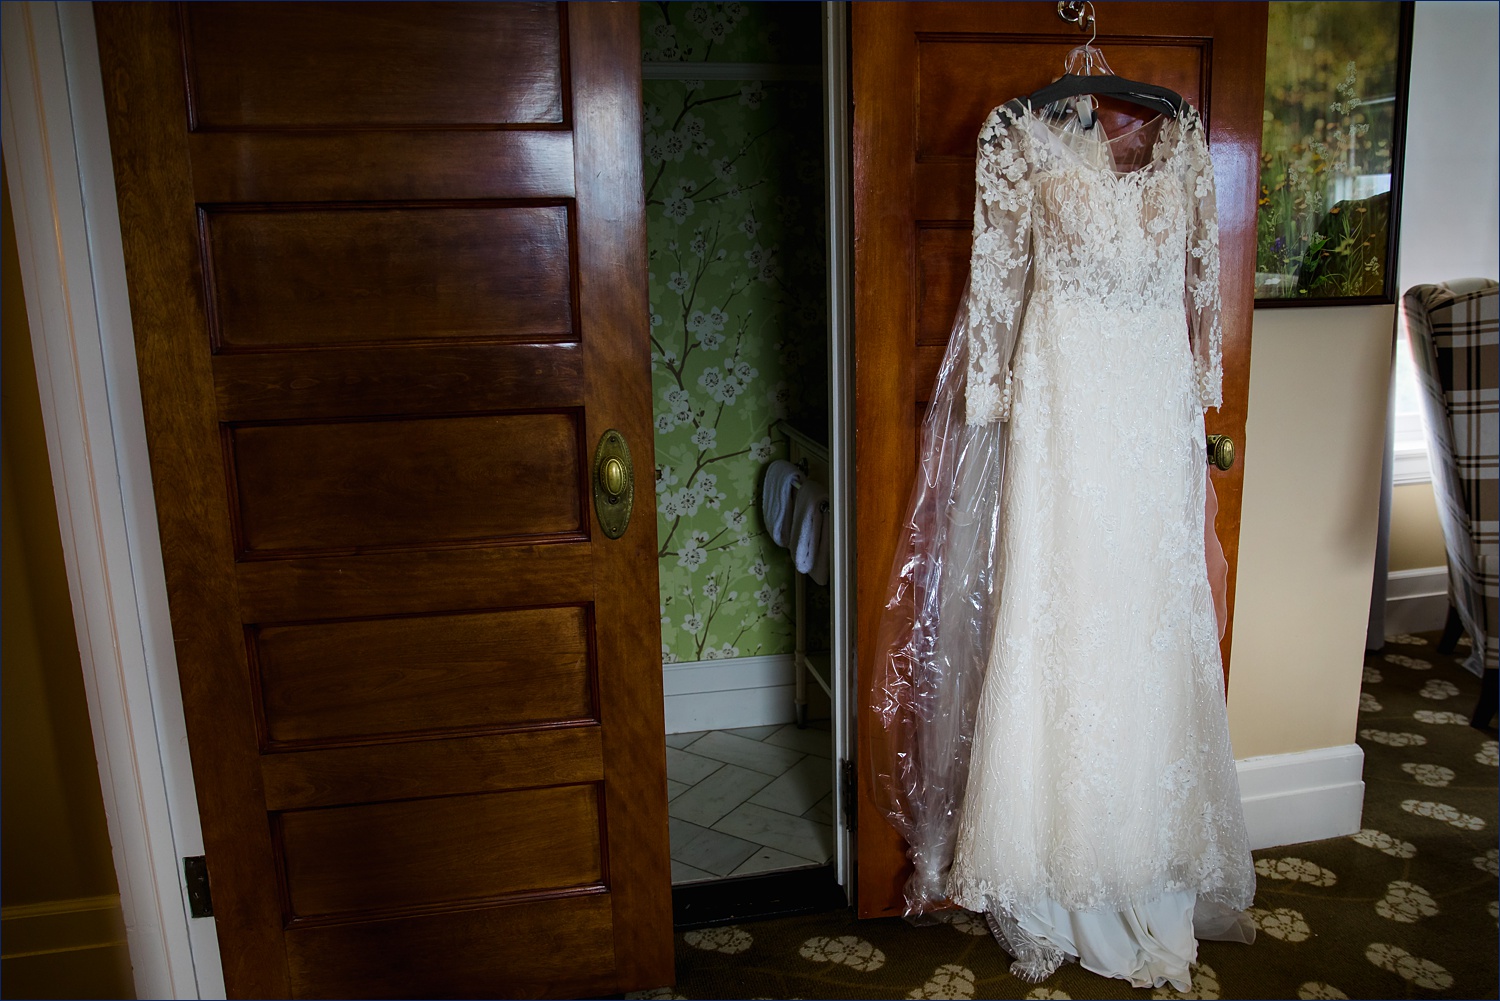 Bride's second wedding dress